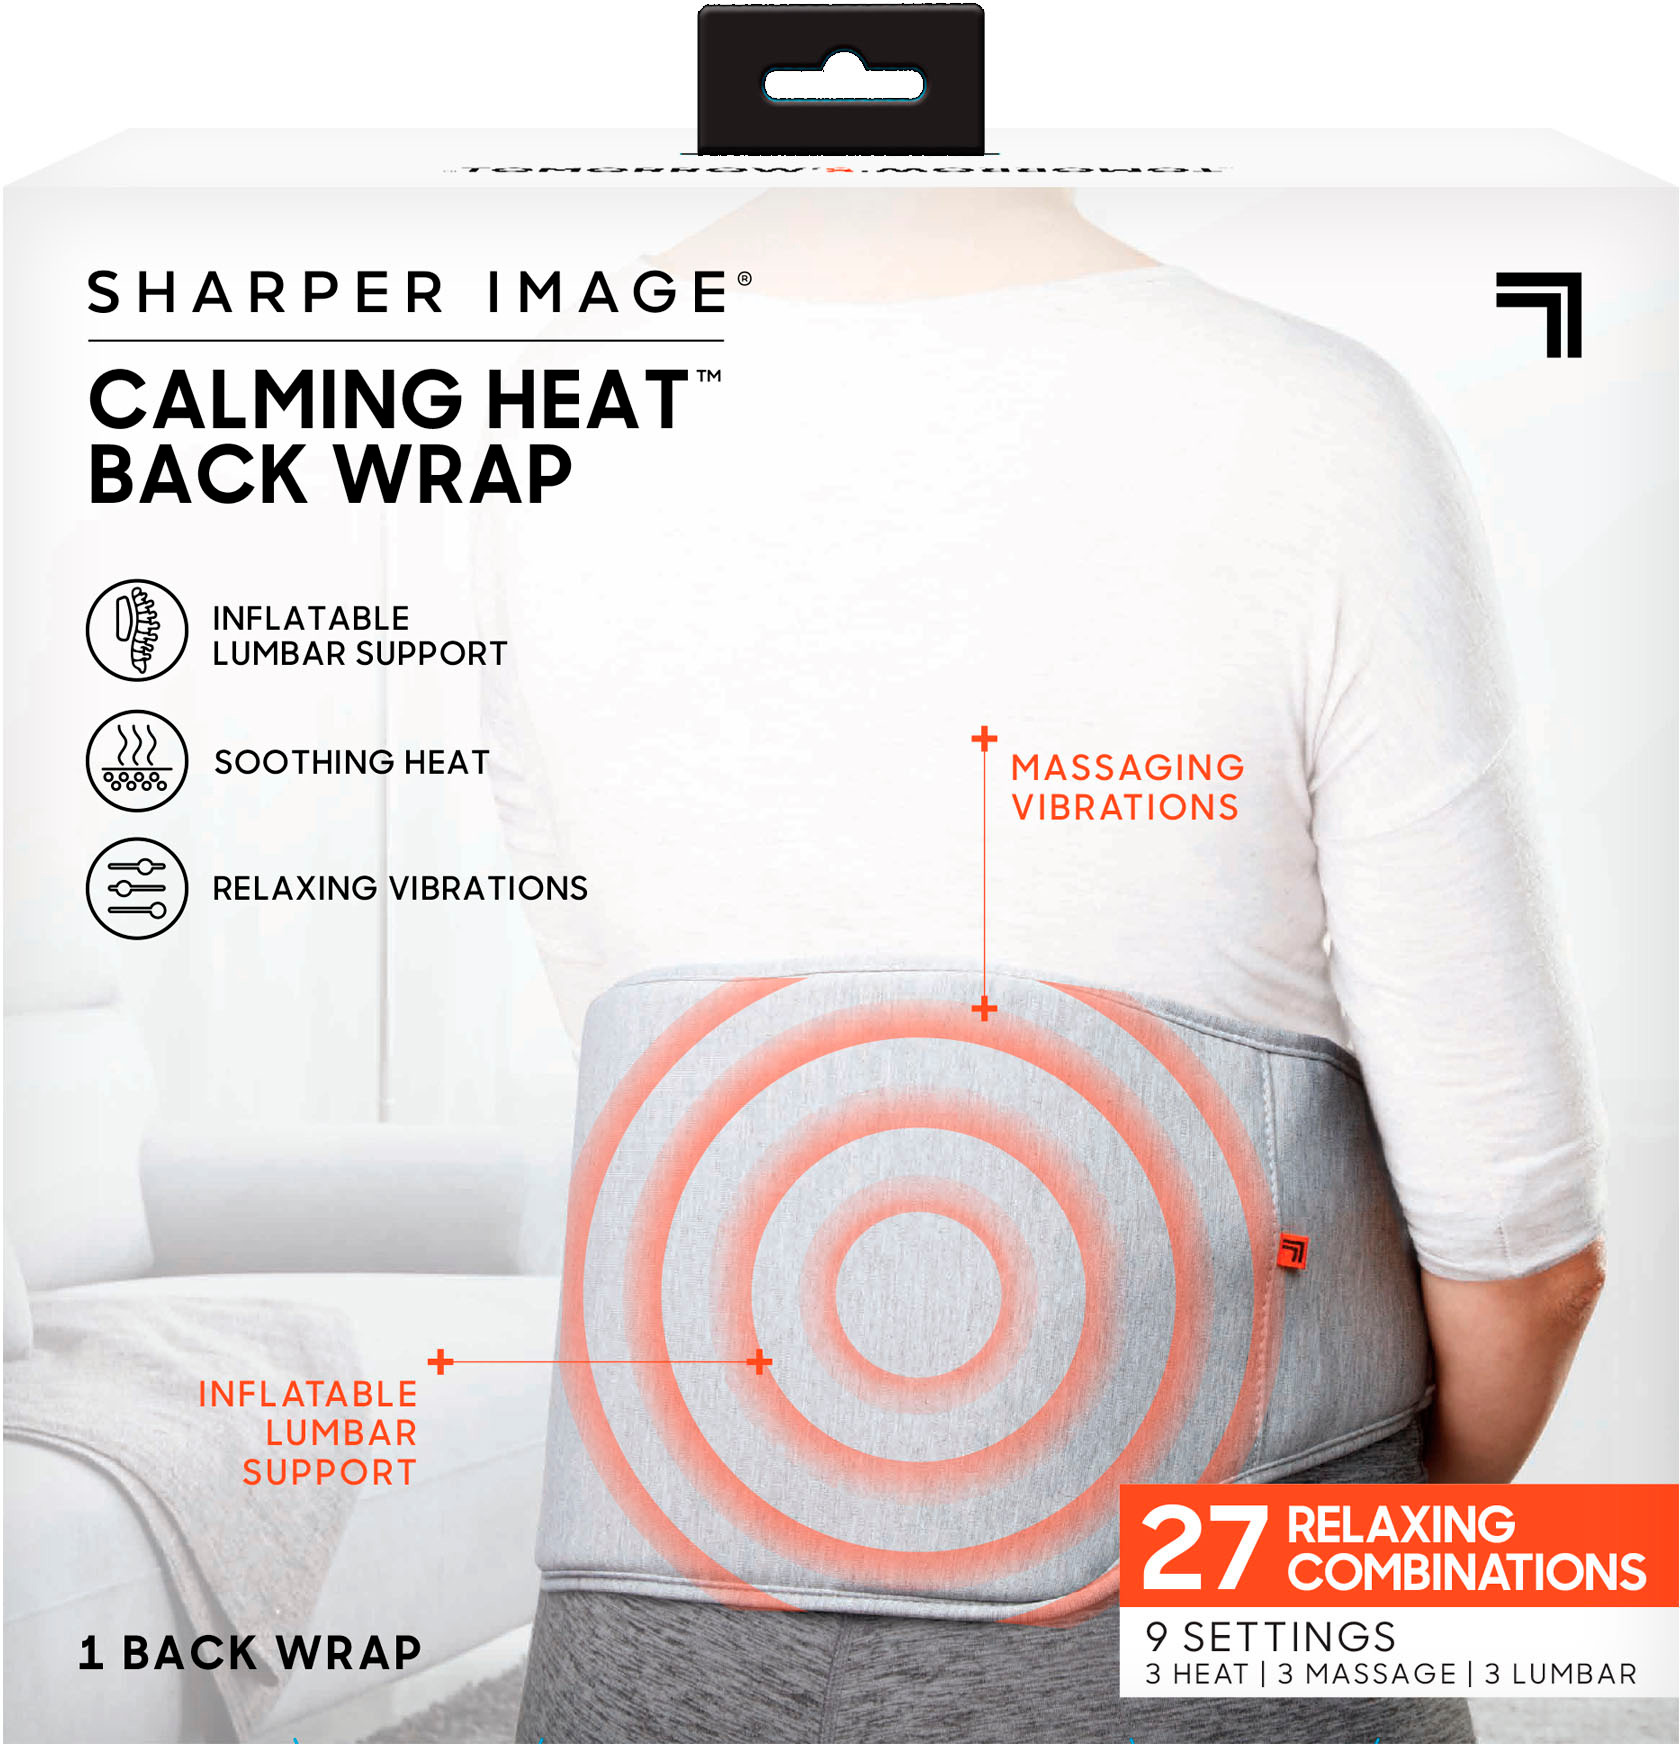 Sharper Image Calming Heat Neck Wrap with Heat Massage 